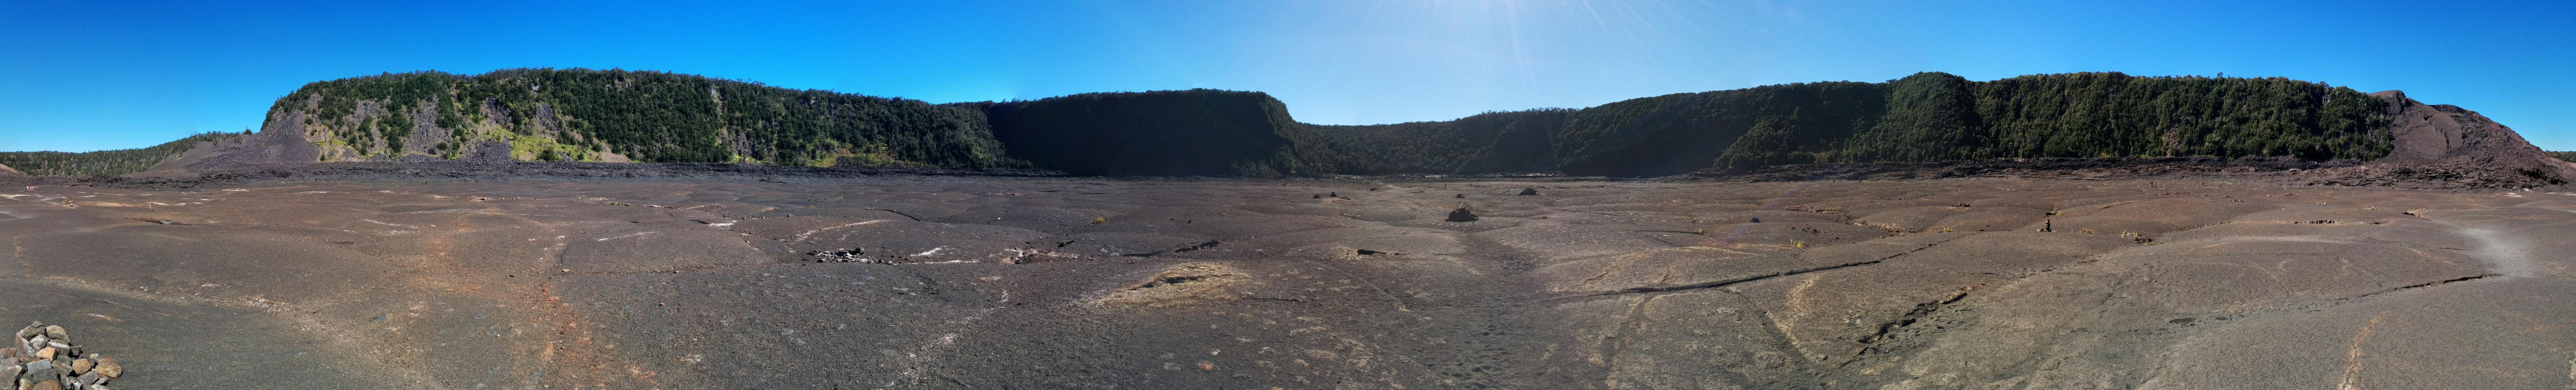 Kilauea Iki Trail Crater